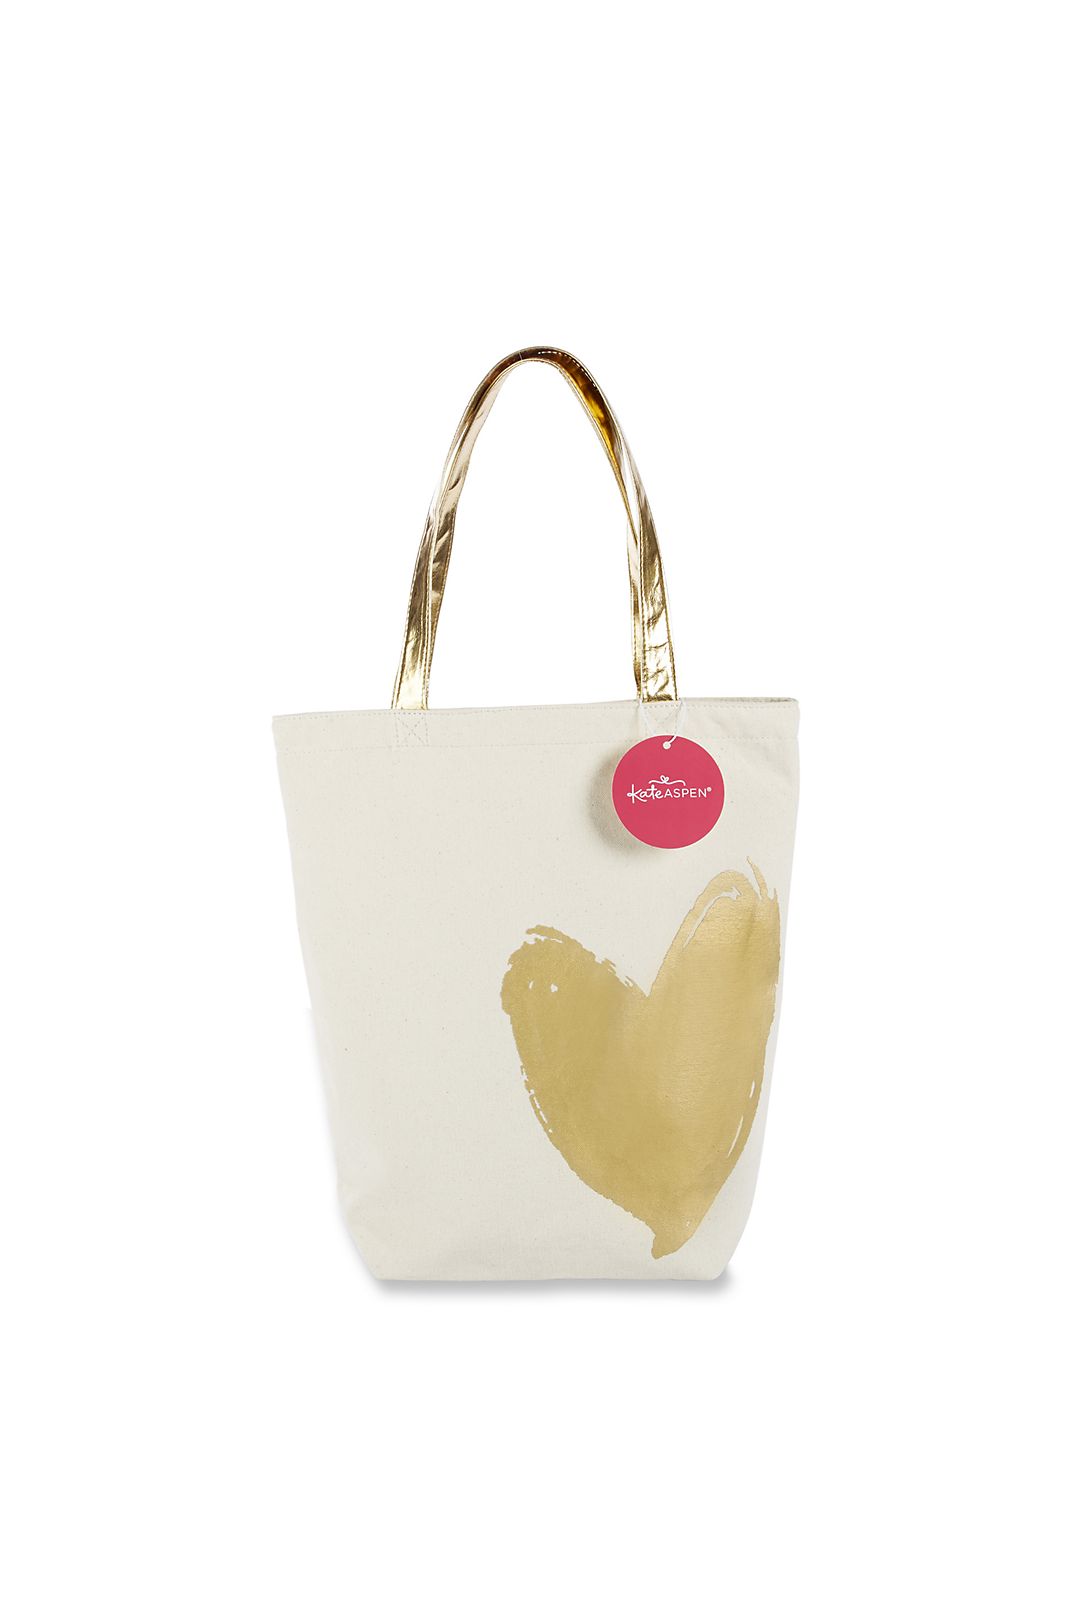 Metallic Gold Heart Canvas Tote Bag Image 1